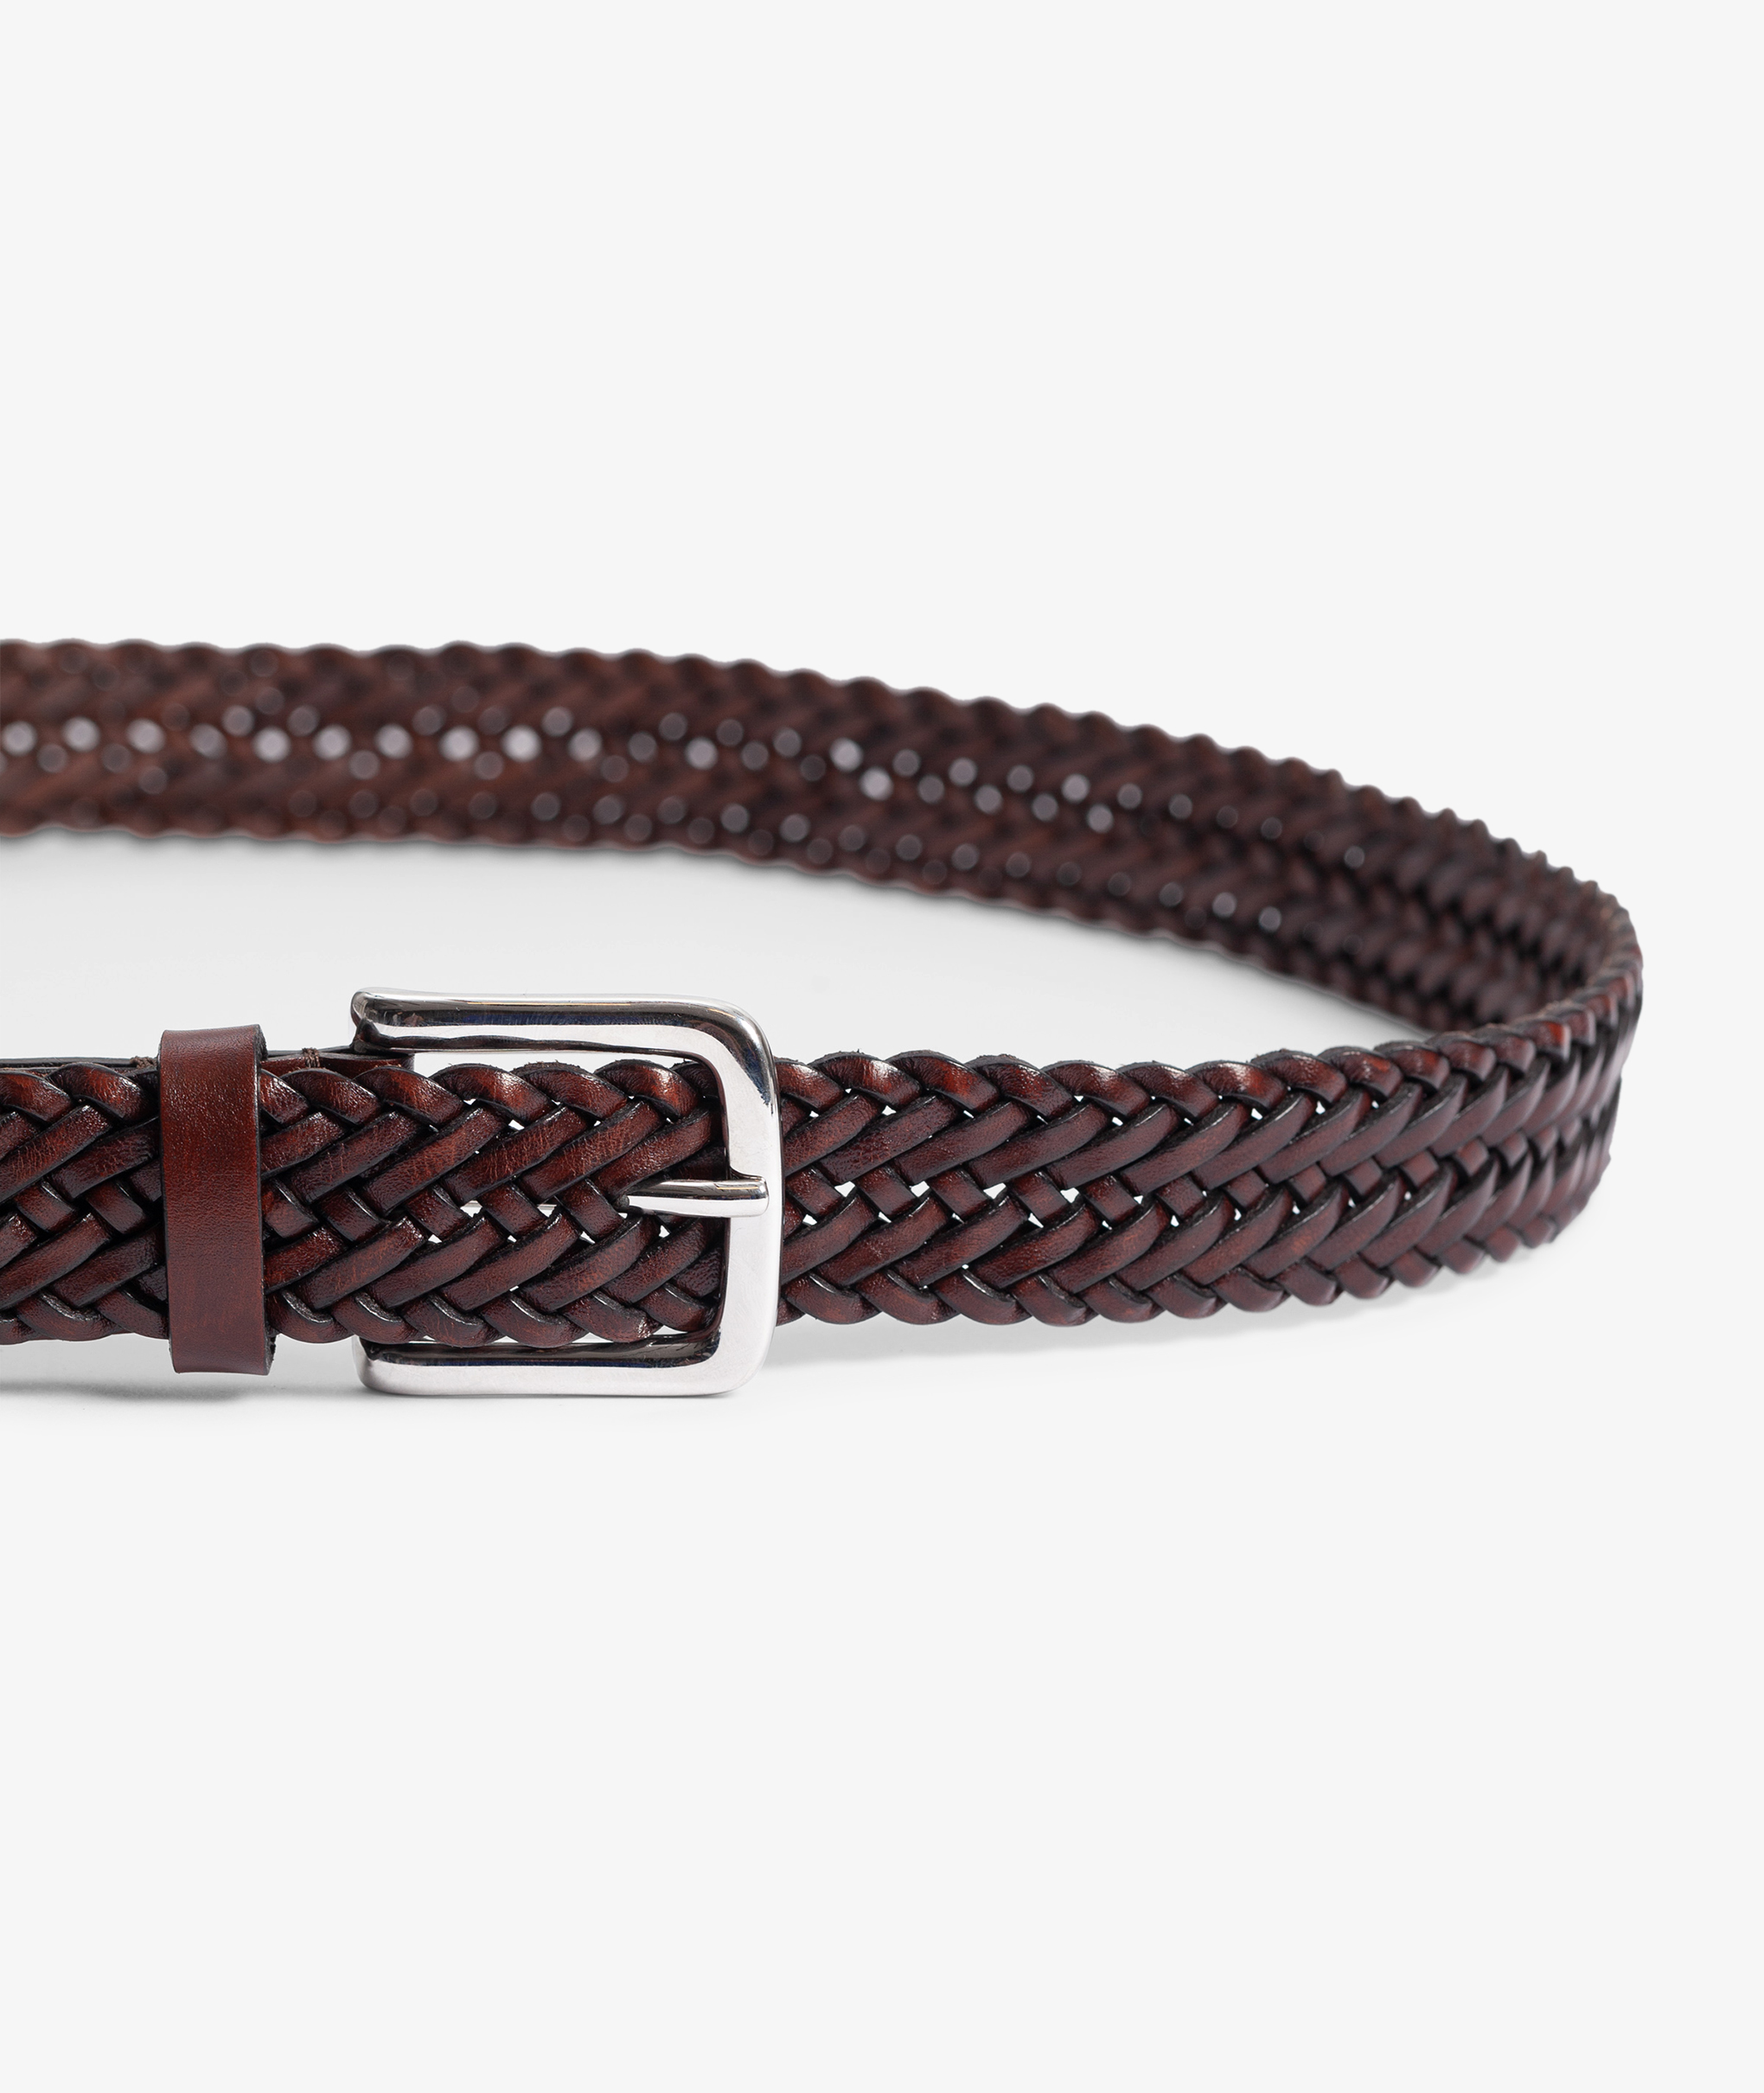 https://www.norsestore.com/shared/167/449/andersons-braided-leather-belt_u.jpg